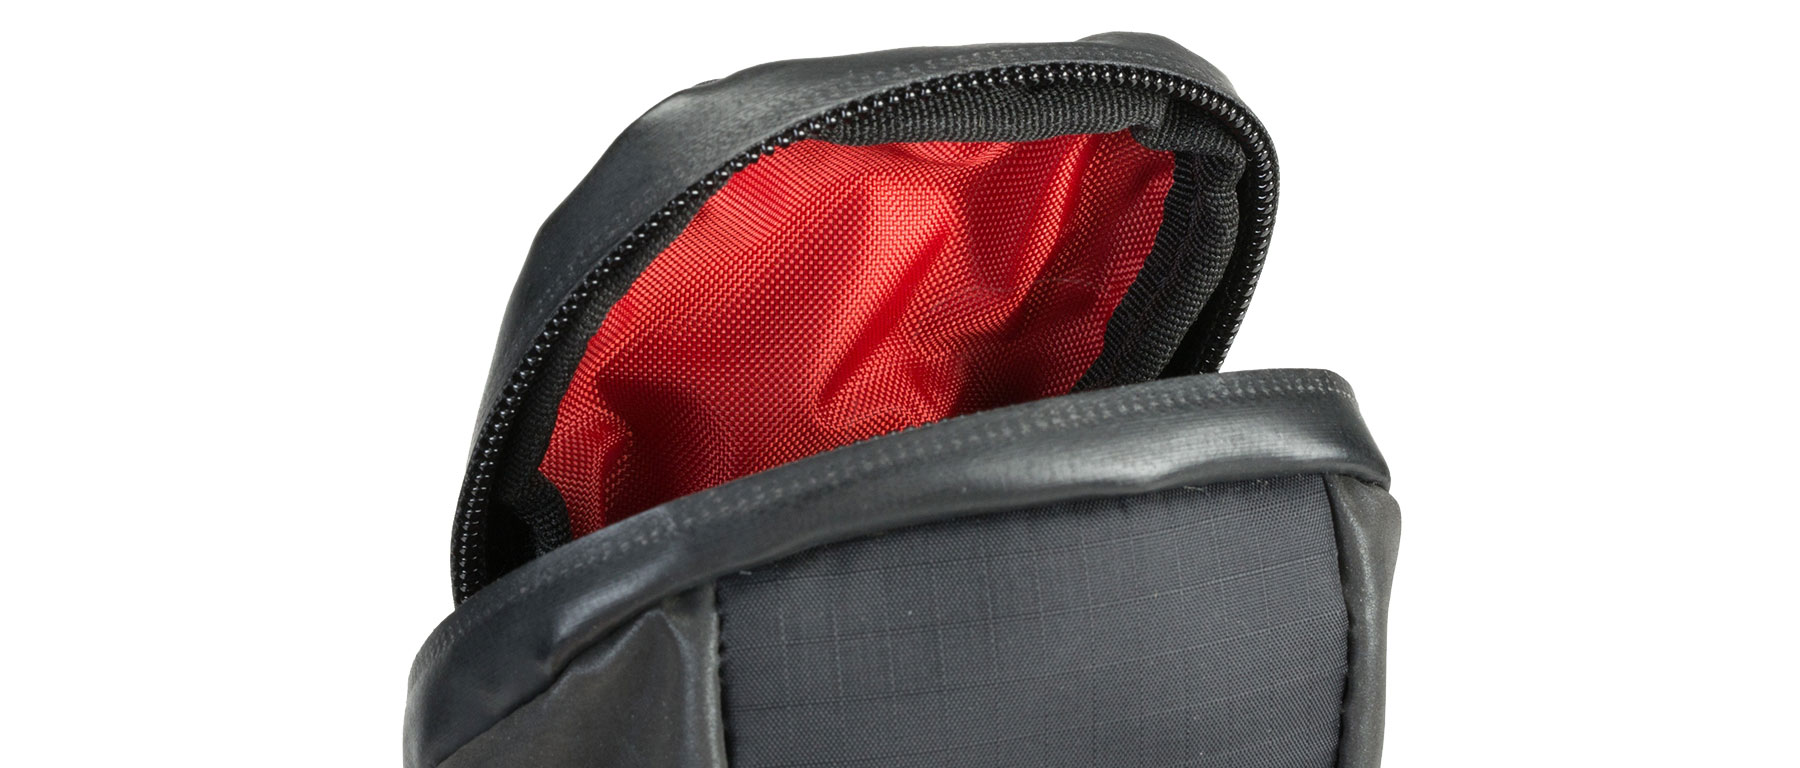 Blackburn Grid Seat Bag